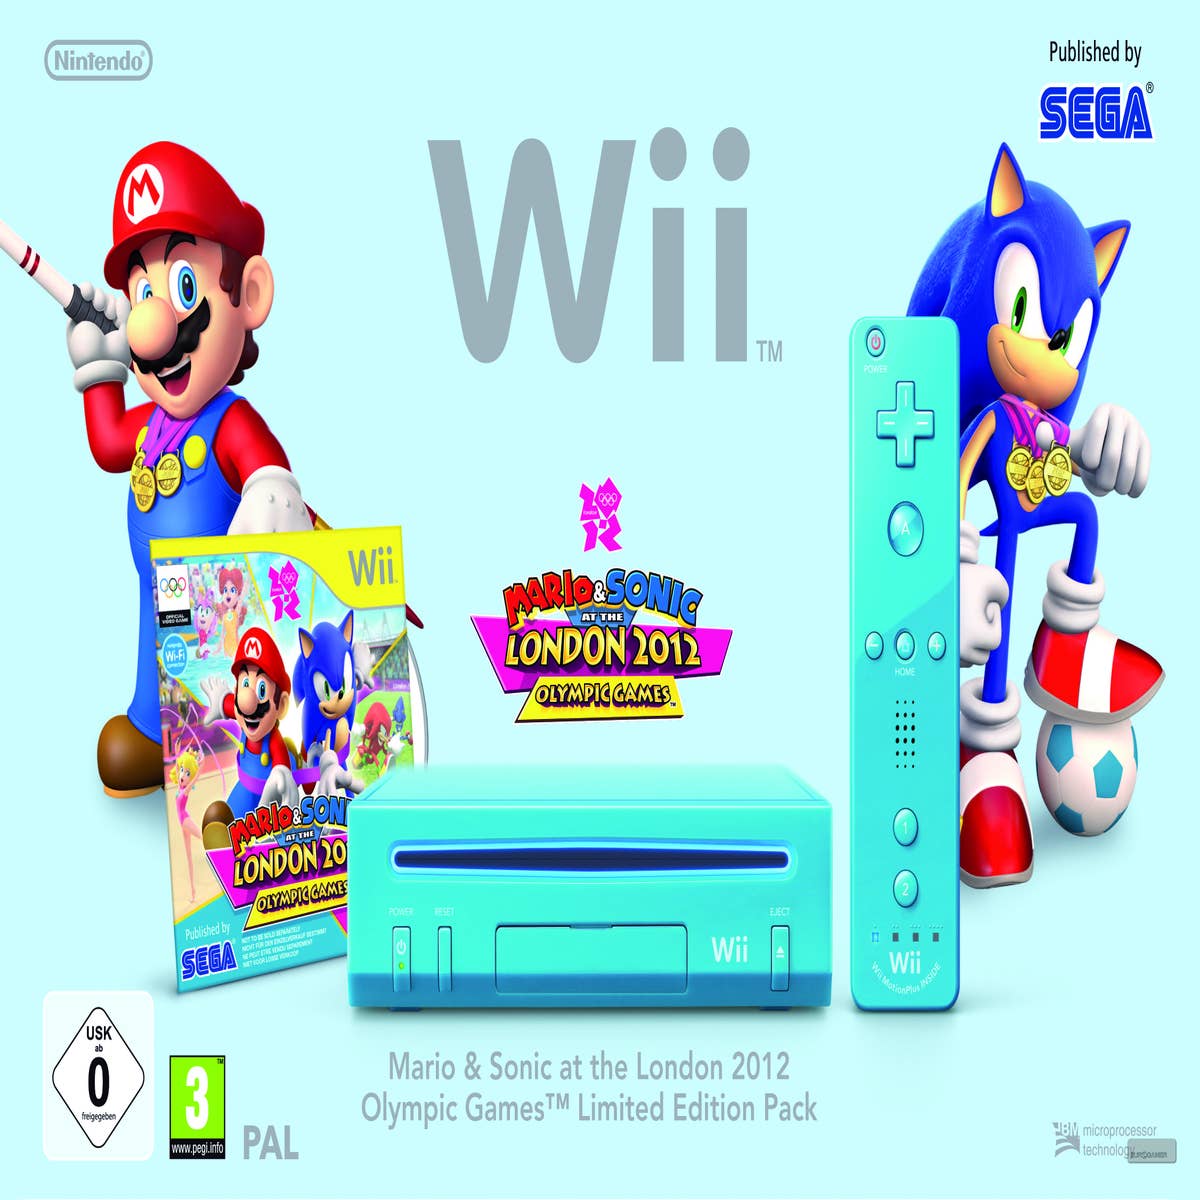 Nintendo Wii: Nintendo Is Releasing A Blue Wii Console In November